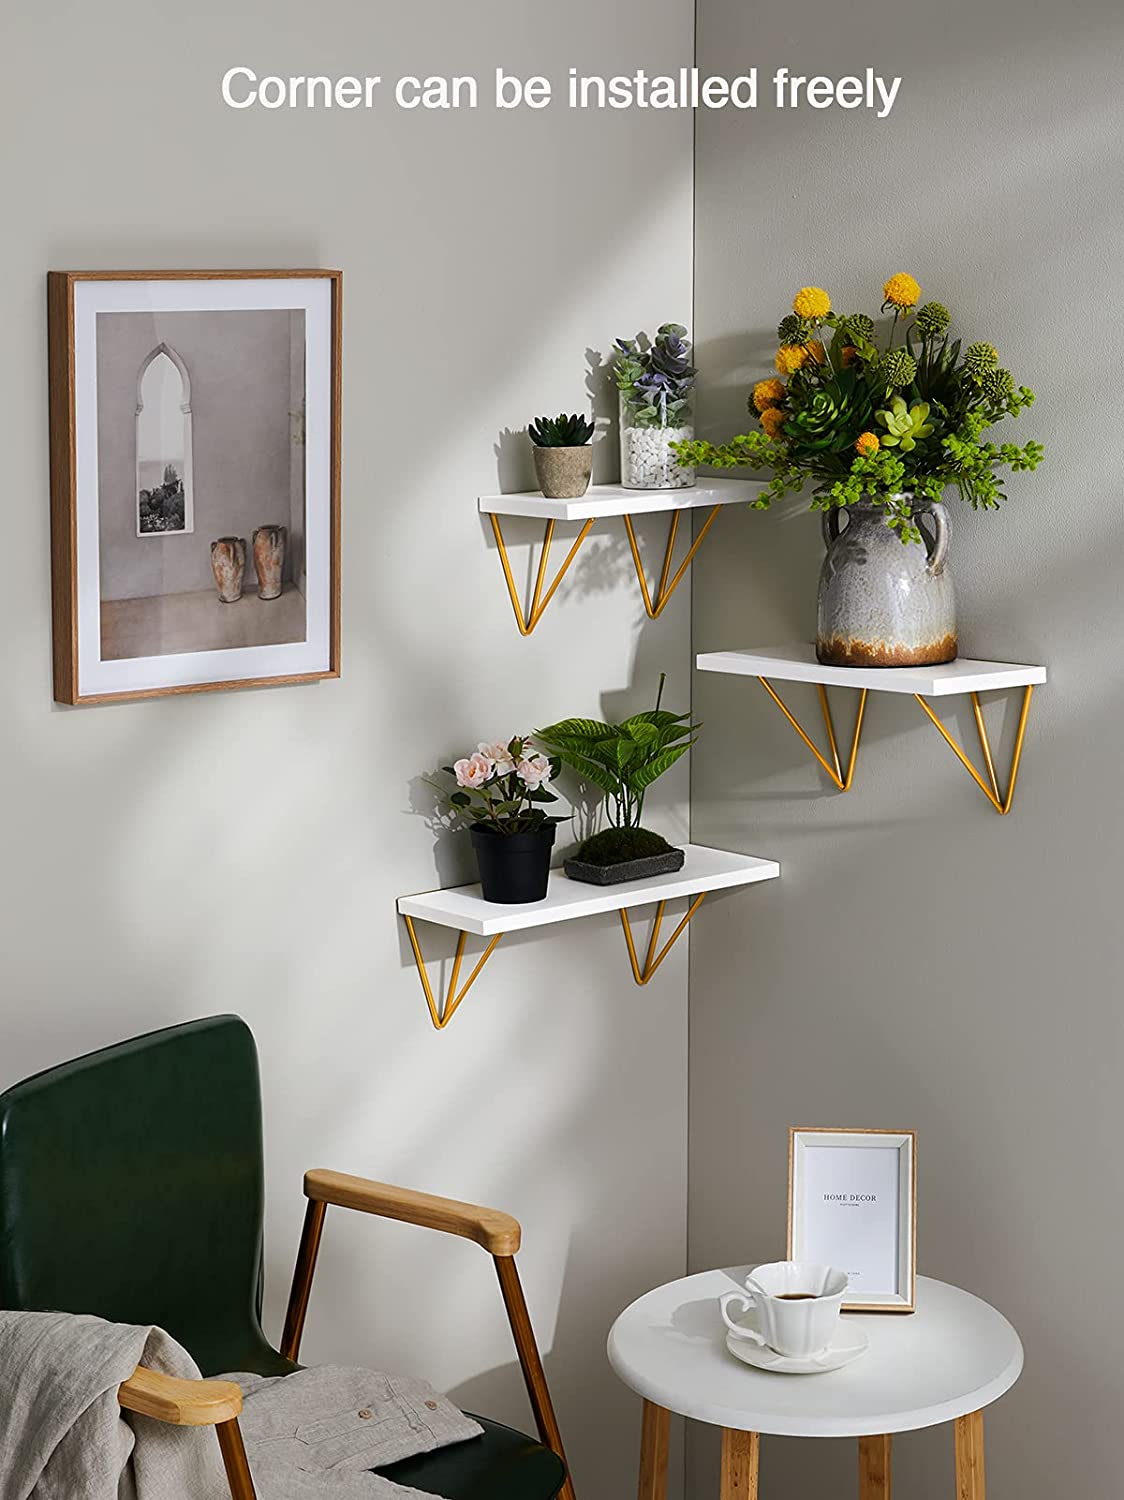 Home Sparkle Floating Shelves, Wall Shelf White and Gold for Bathroom/Bedroom/Living Room/Kitchen 3 Sets